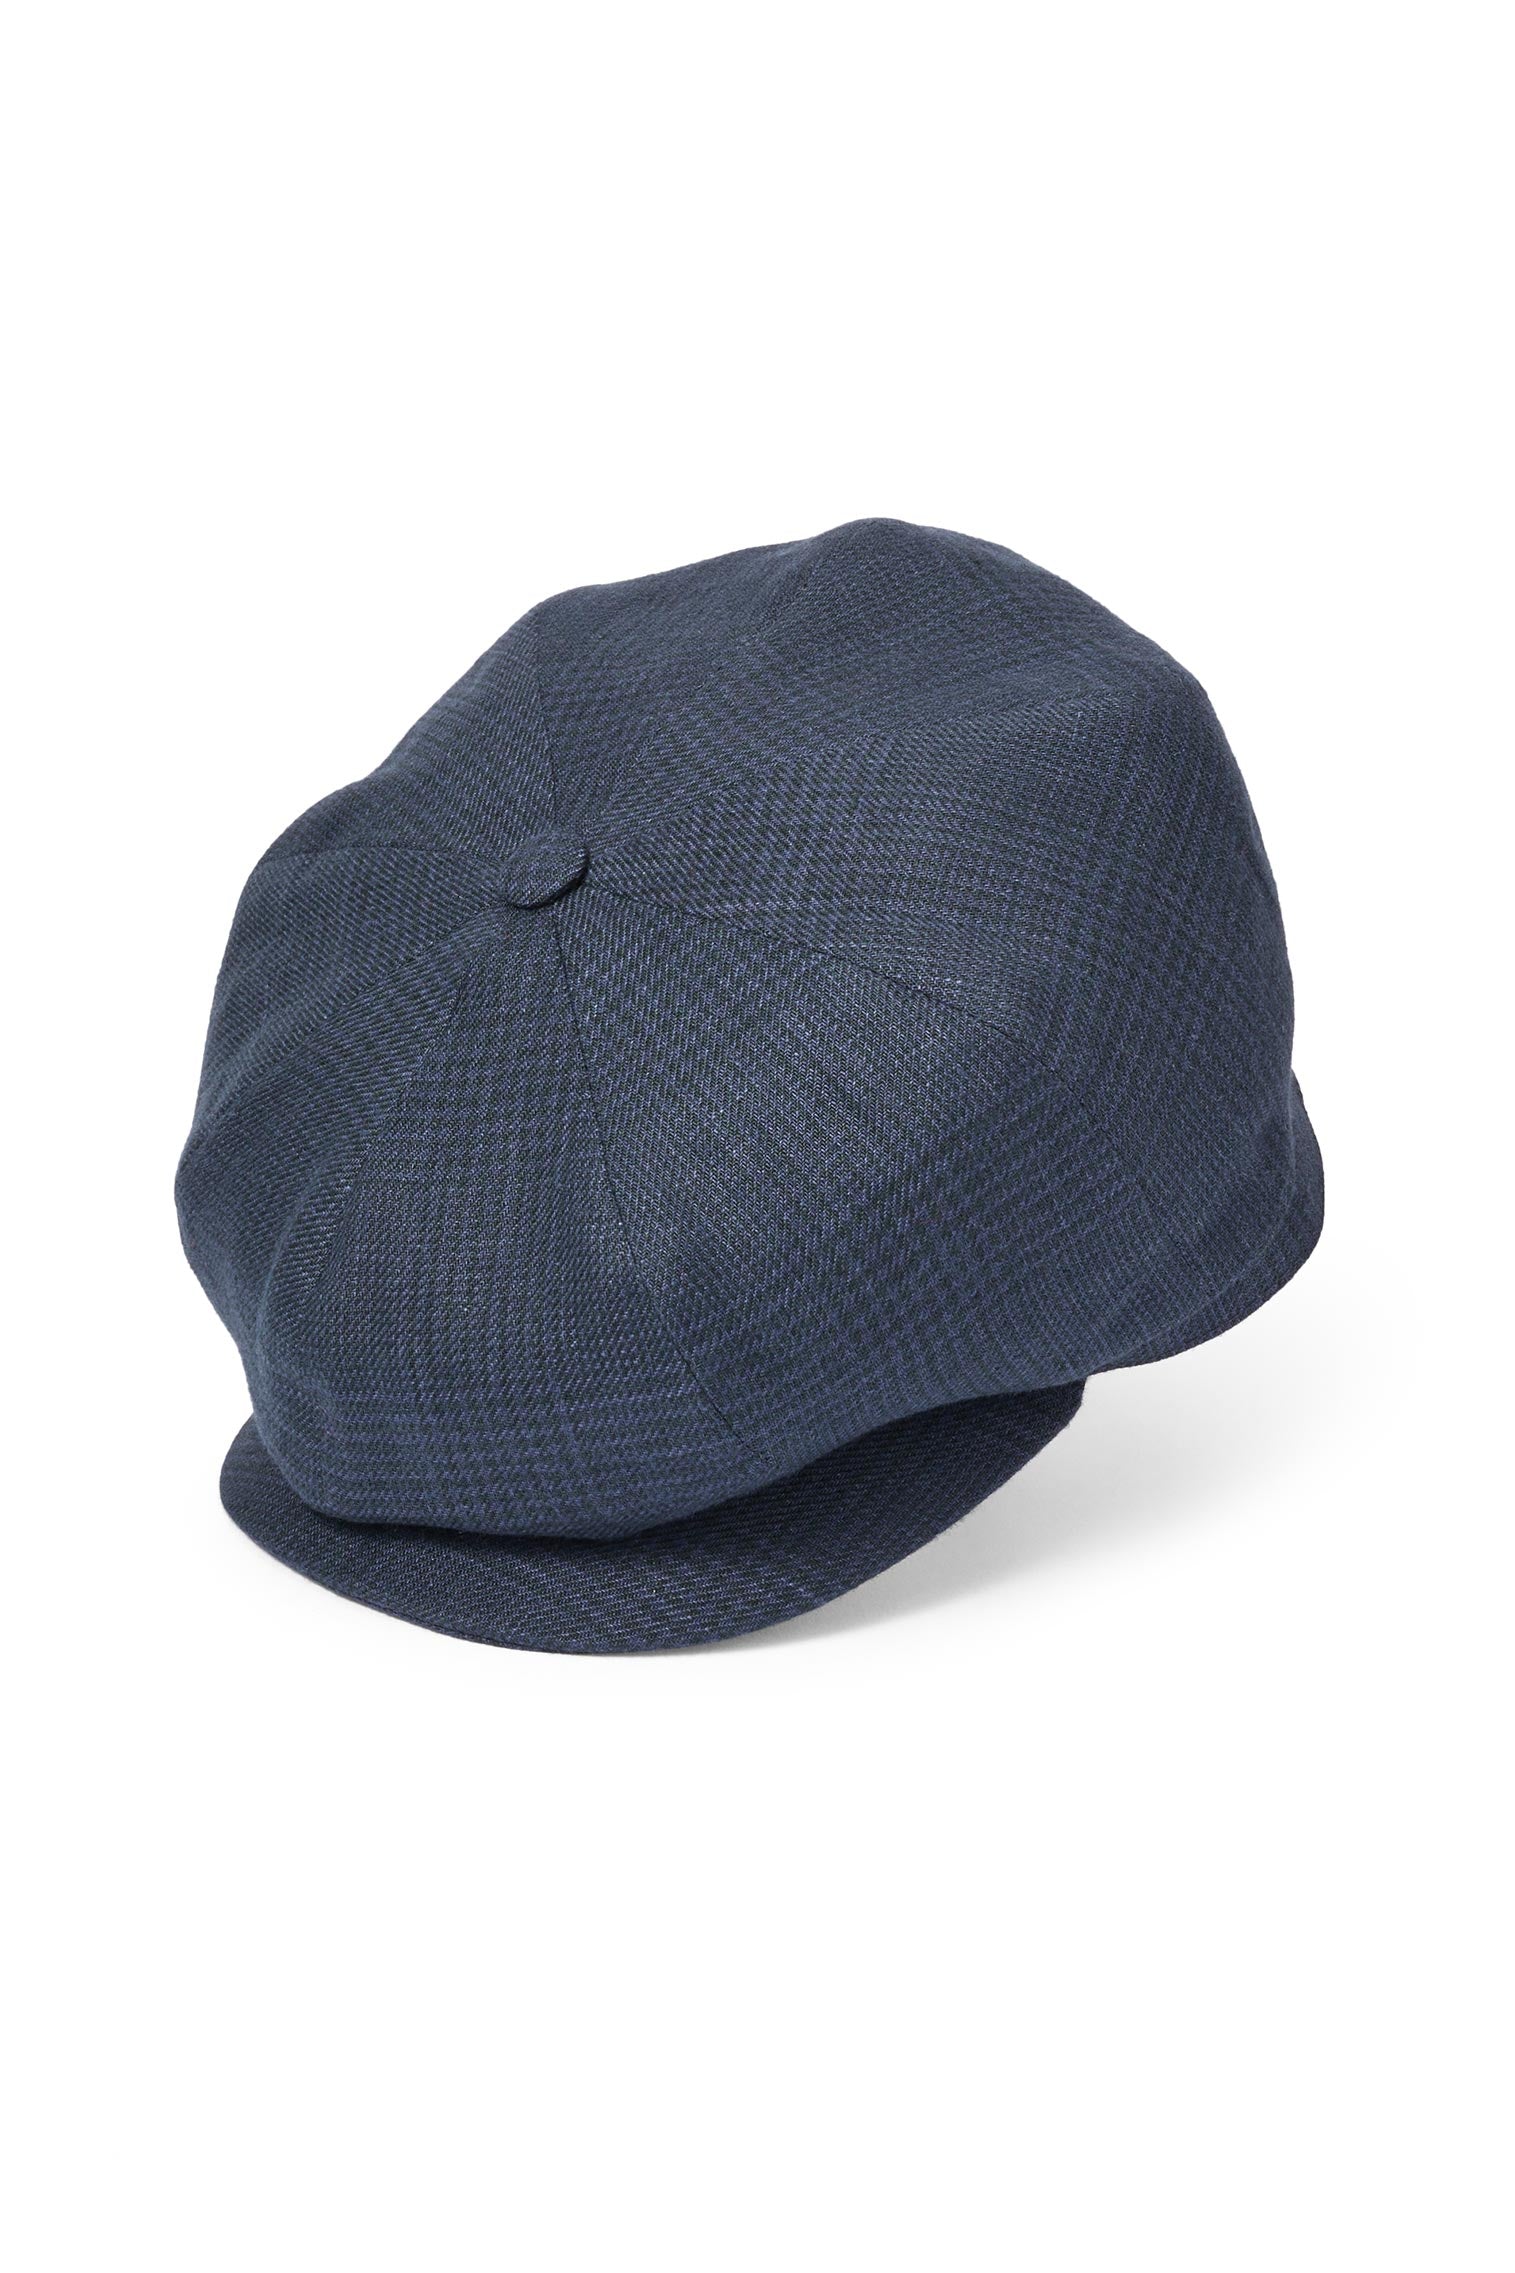 Tremelo Linen Navy Check Bakerboy Cap - New Season Men's Hats - Lock & Co. Hatters London UK